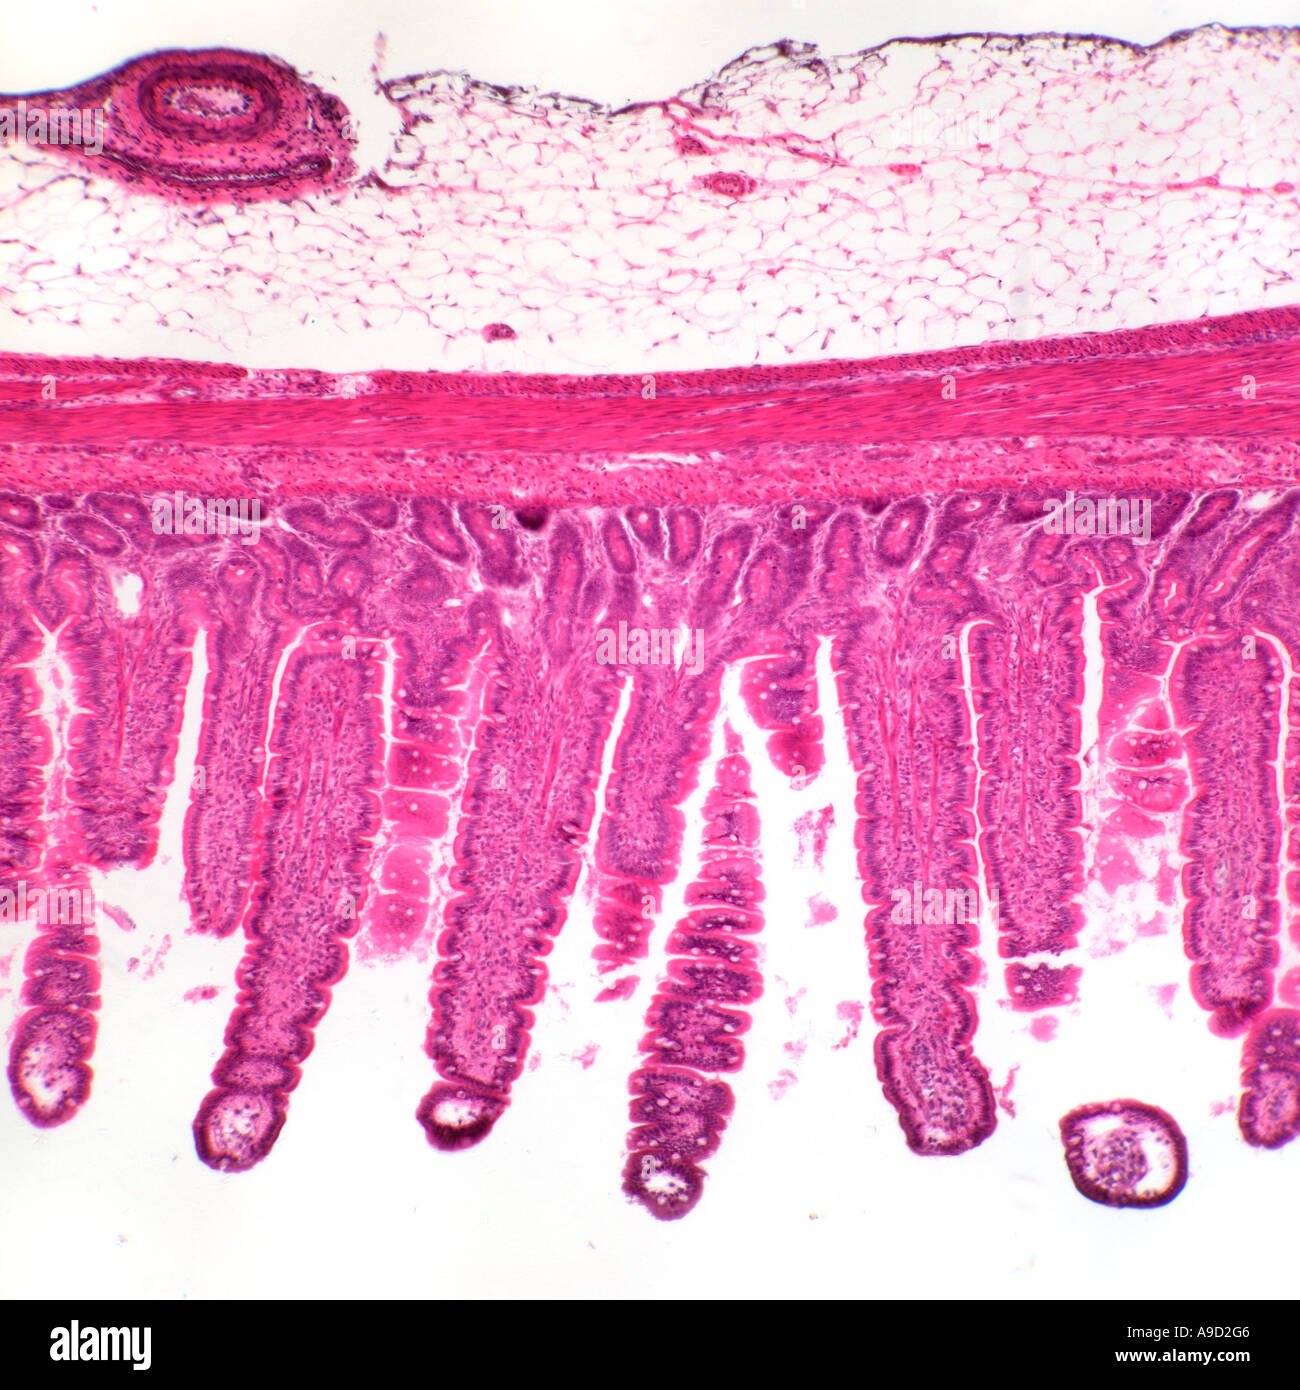 Human small intestine section showing villi, brightfield ...